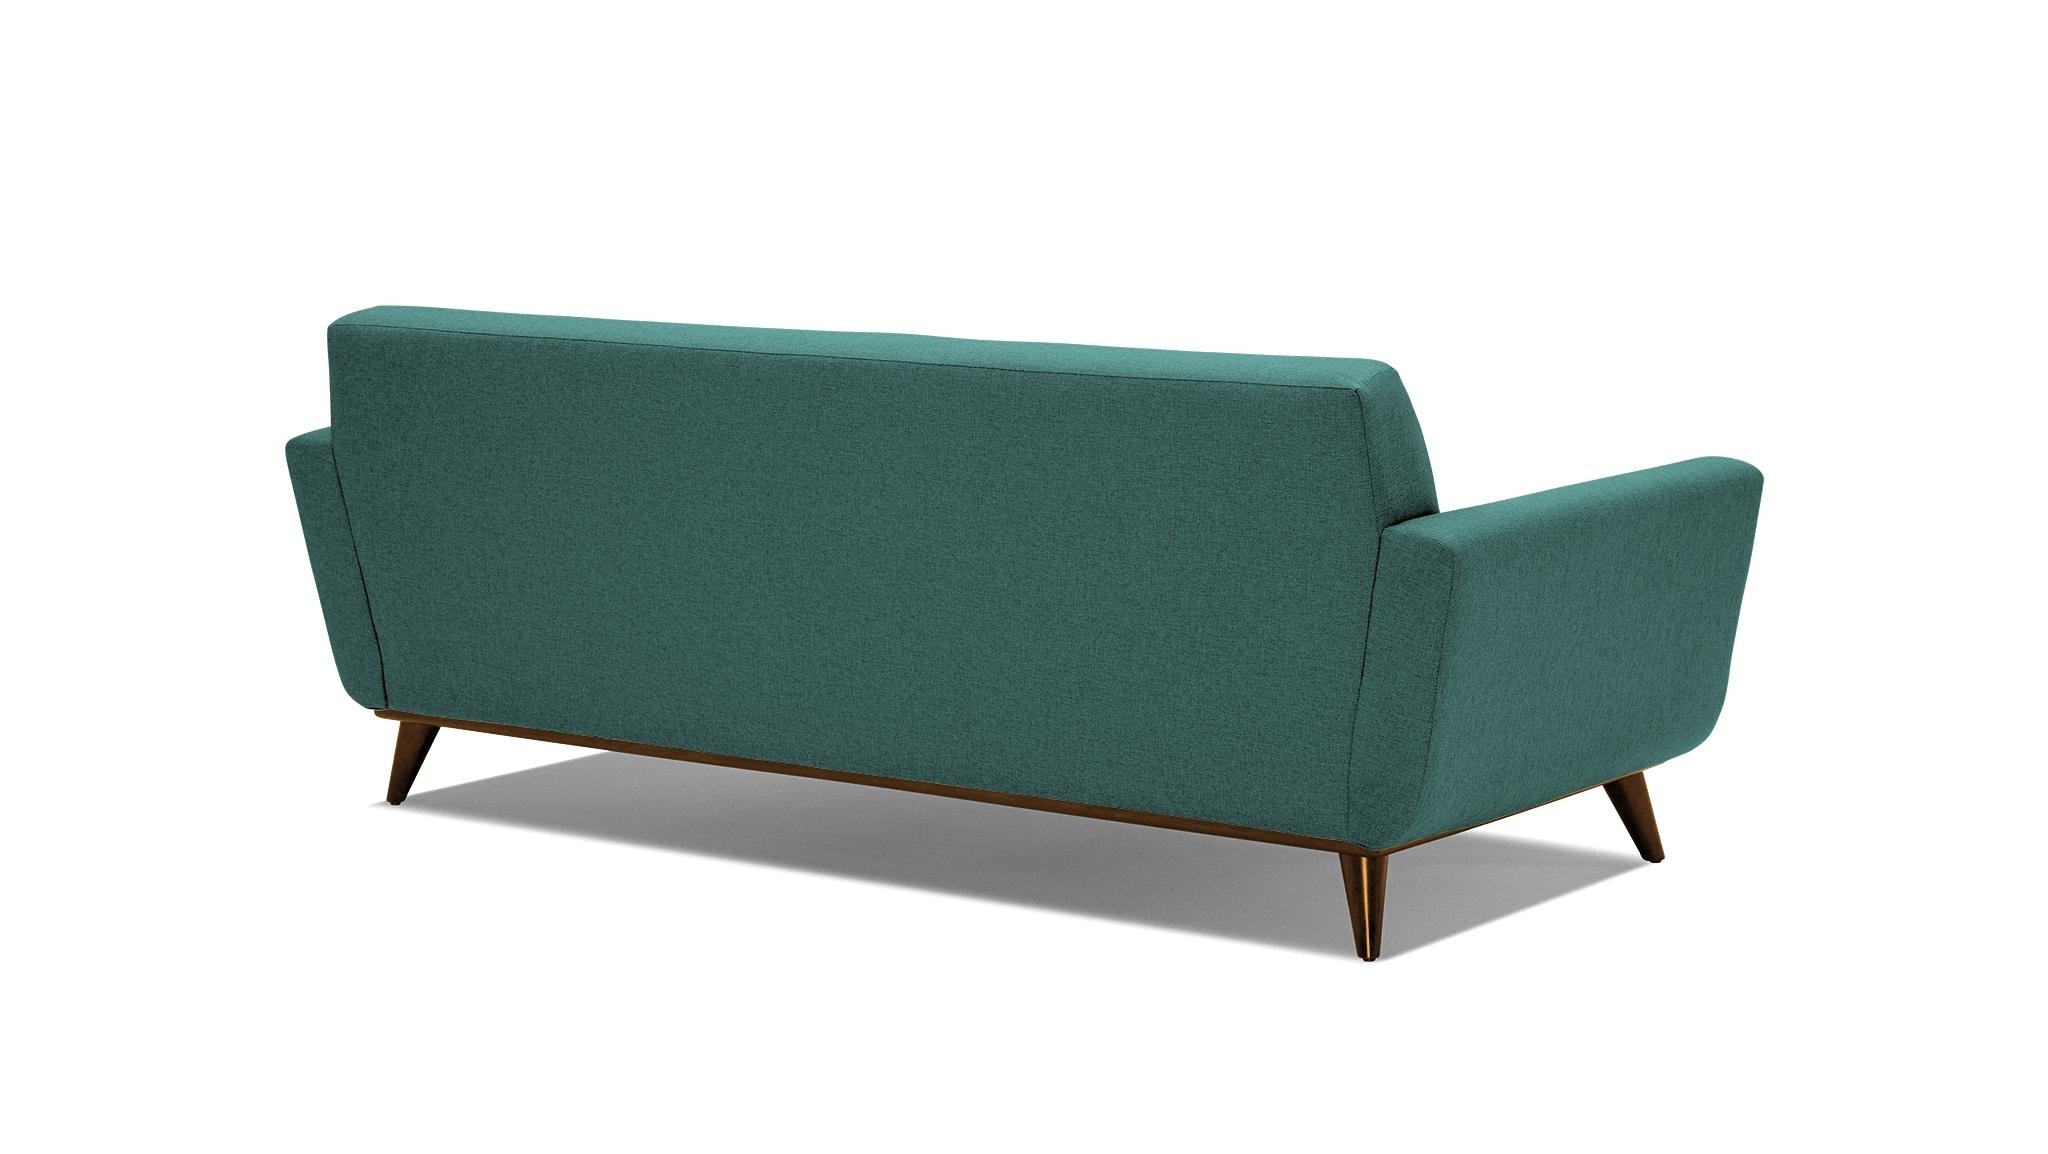 Blue Hughes Mid Century Modern Sofa - Prime Peacock - Mocha - Image 3